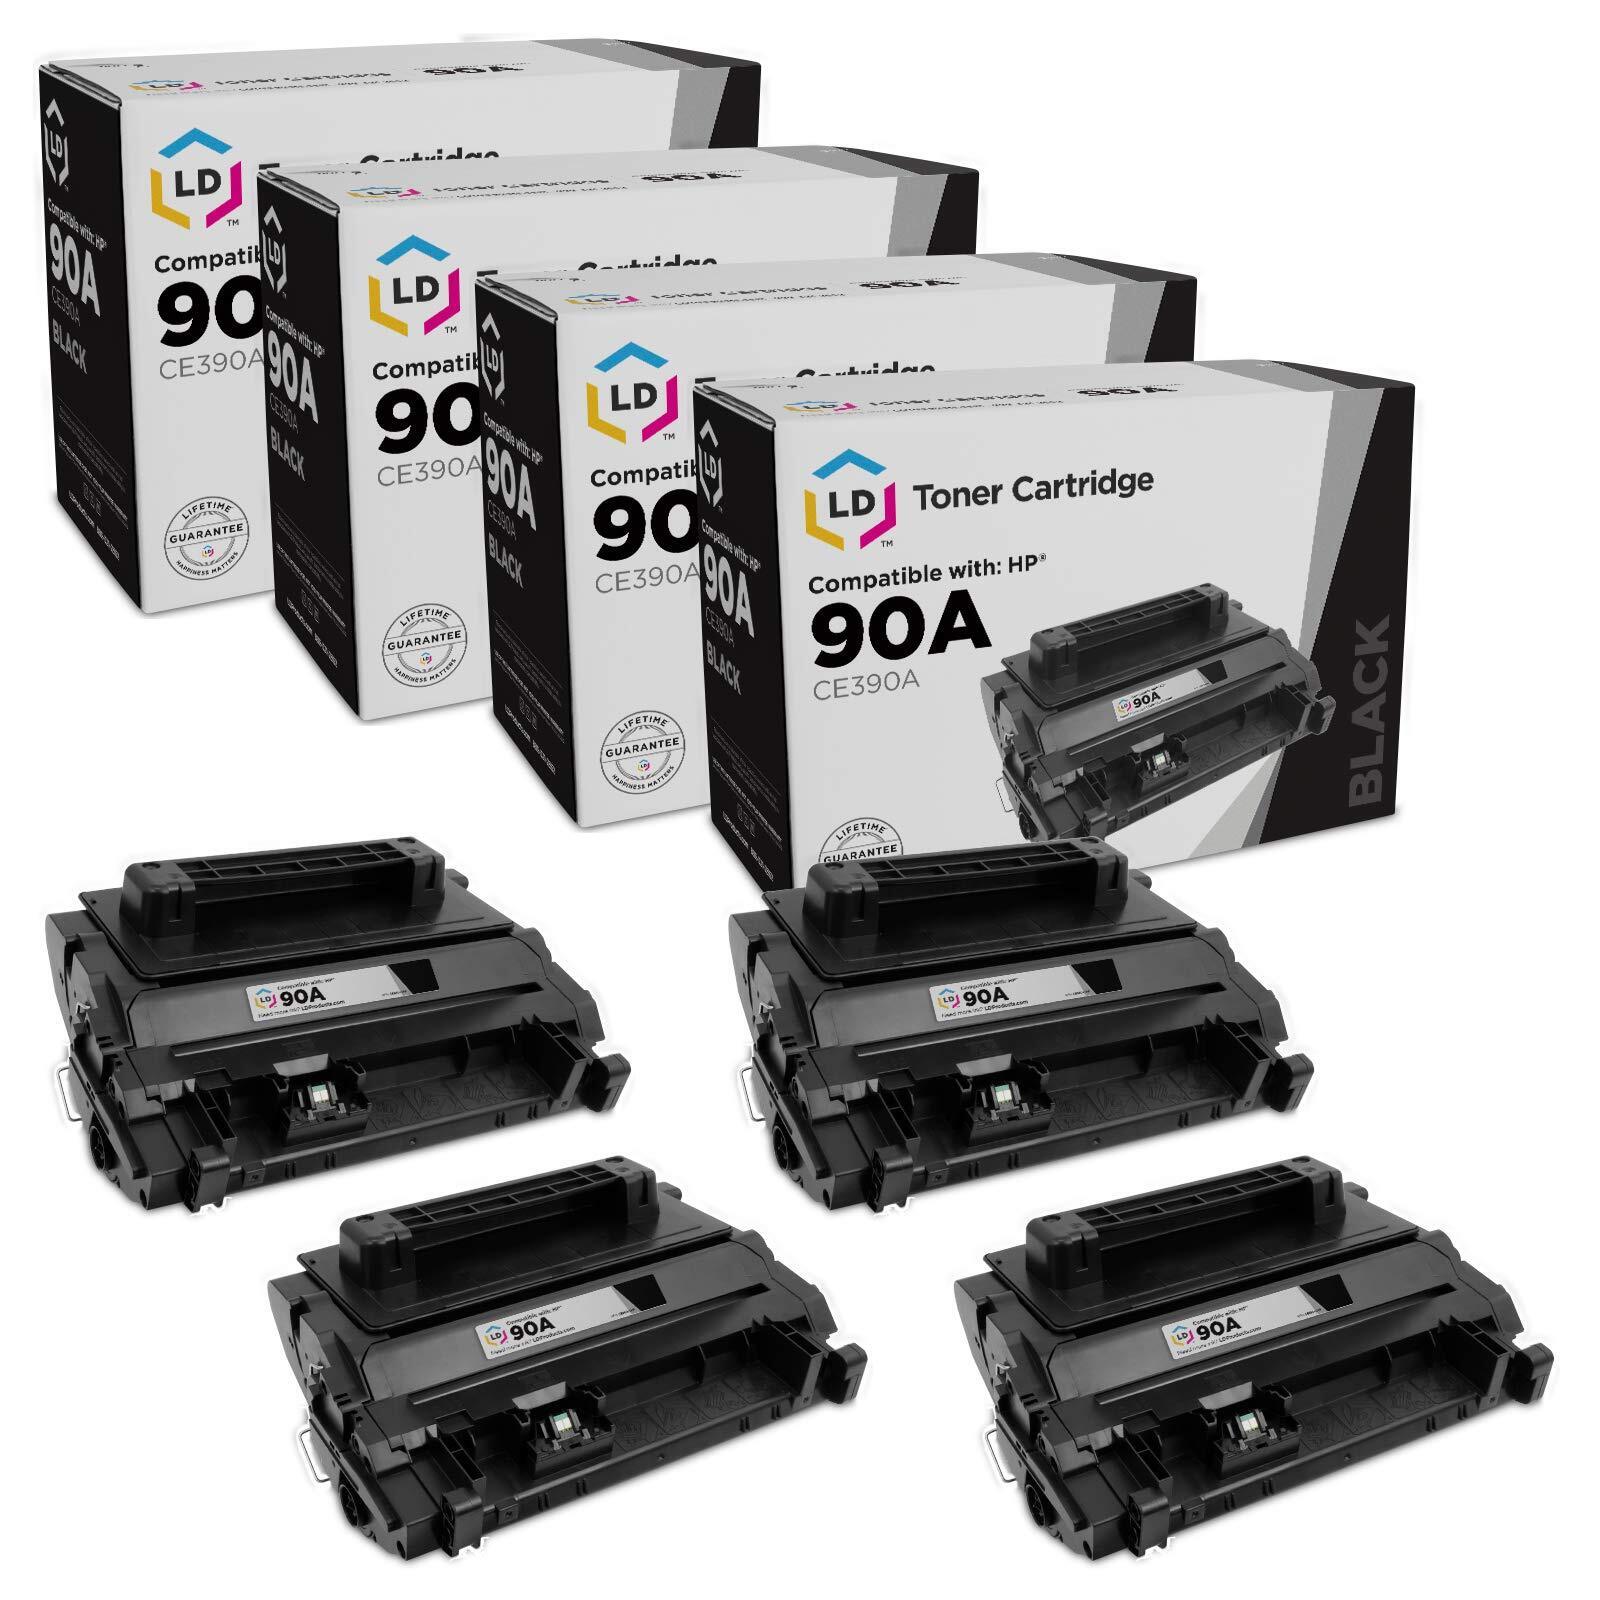 LD Compatible Replacements for HP CE390A / 90A 4PK Black Laser Toner Cartridges